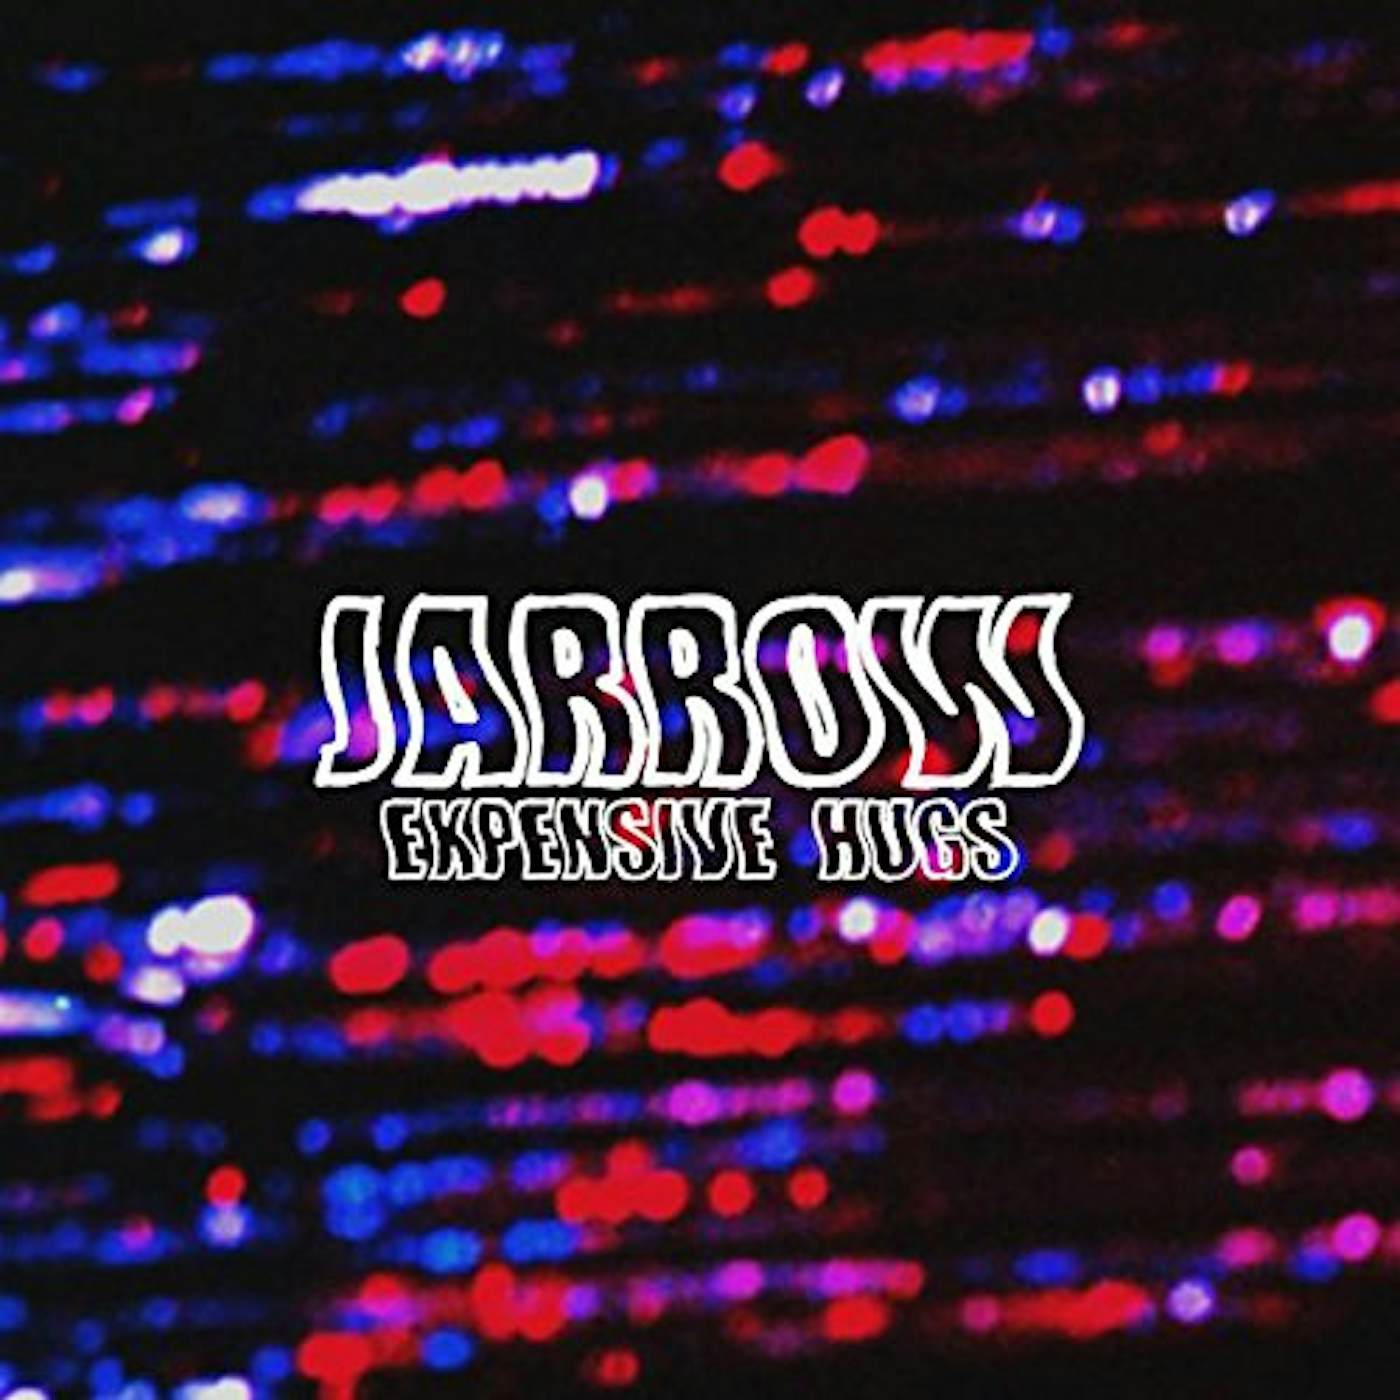 Jarrow EXPENSIVE HUGS CD